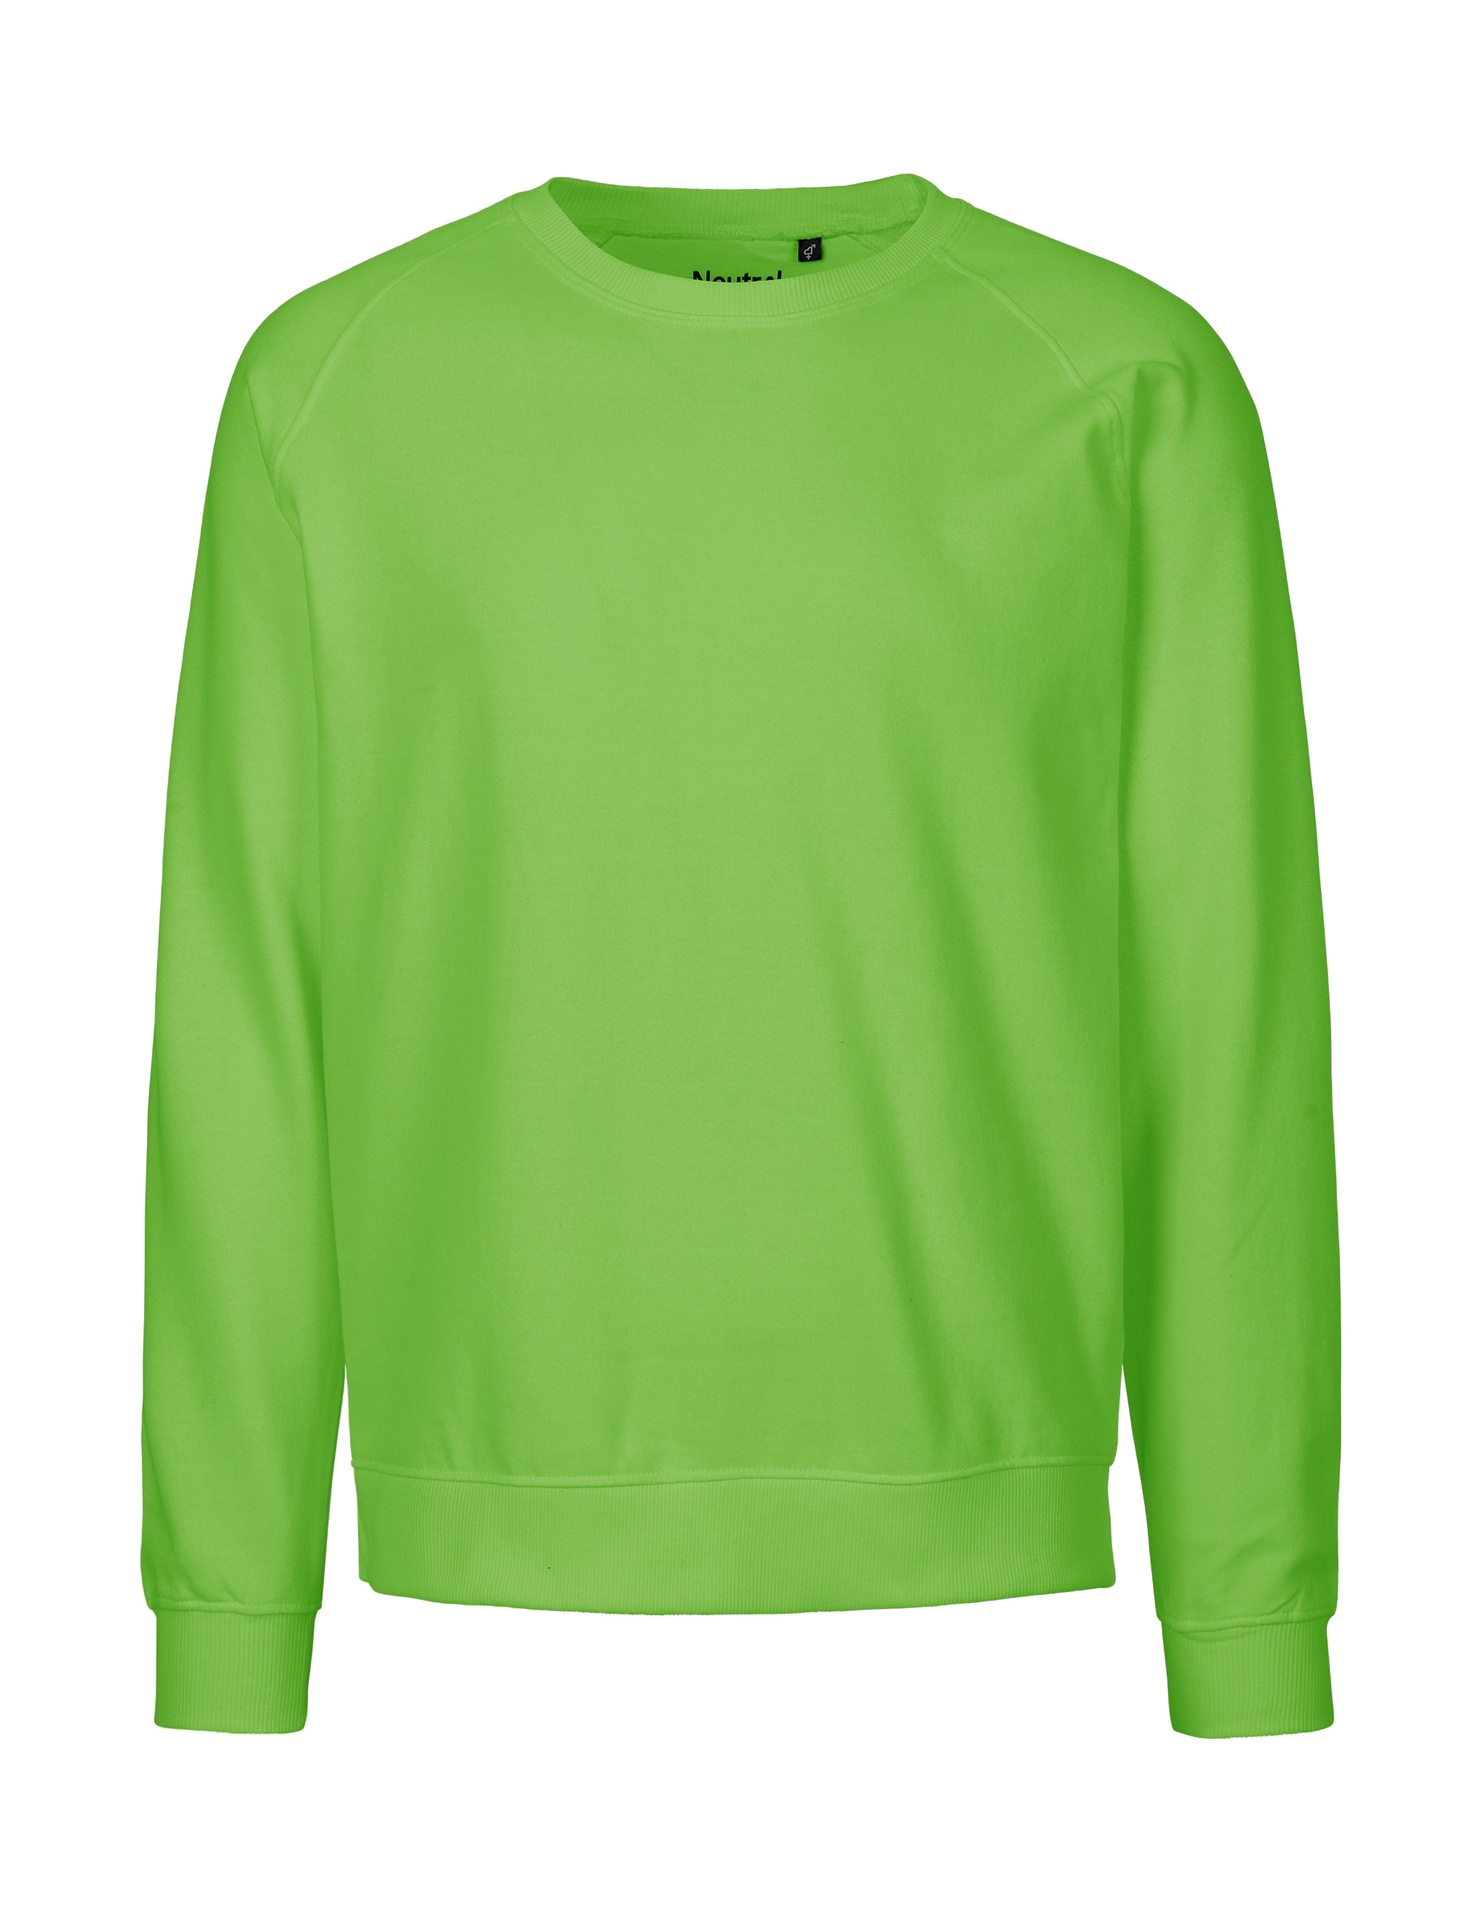 [PR/02717] Unisex Sweatshirt (Lime 12, M)